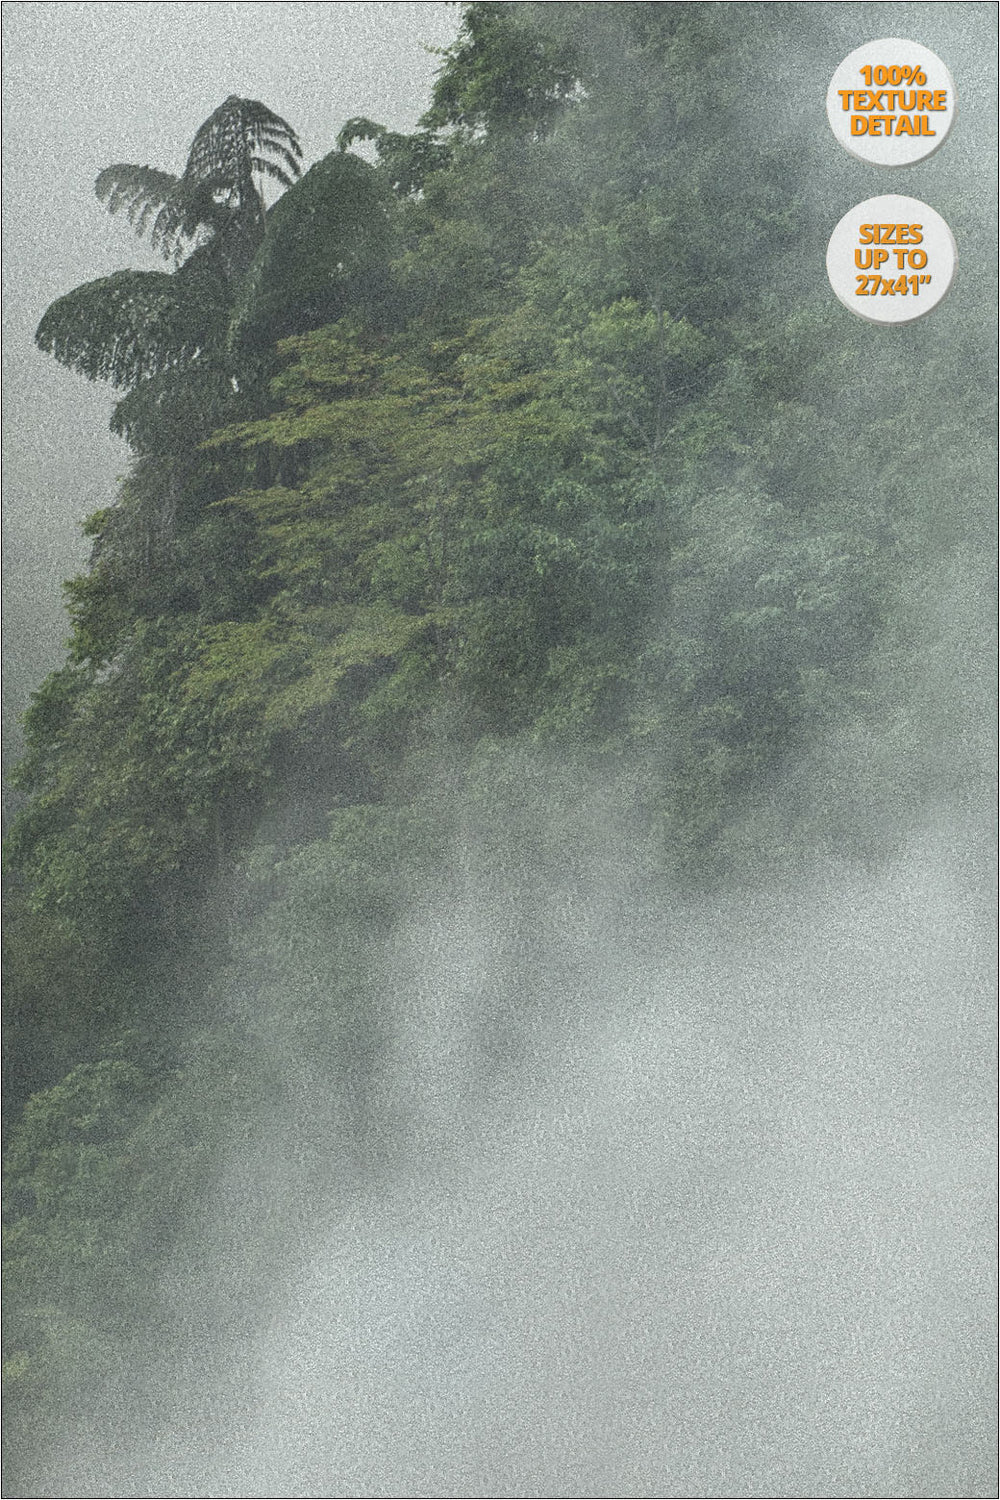 Tree in the fog, Bac Ha, Vietnam. | 100% Print Detail.